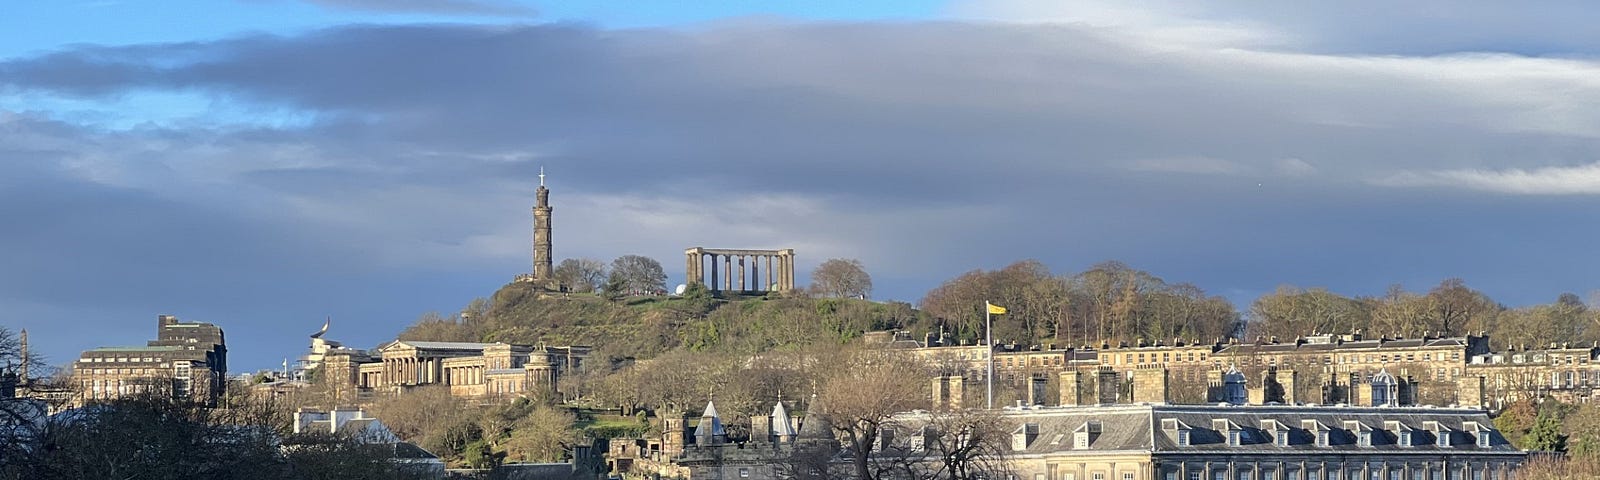 Edinburgh with Holyrood Palace and Calton Hill. Photo by author.